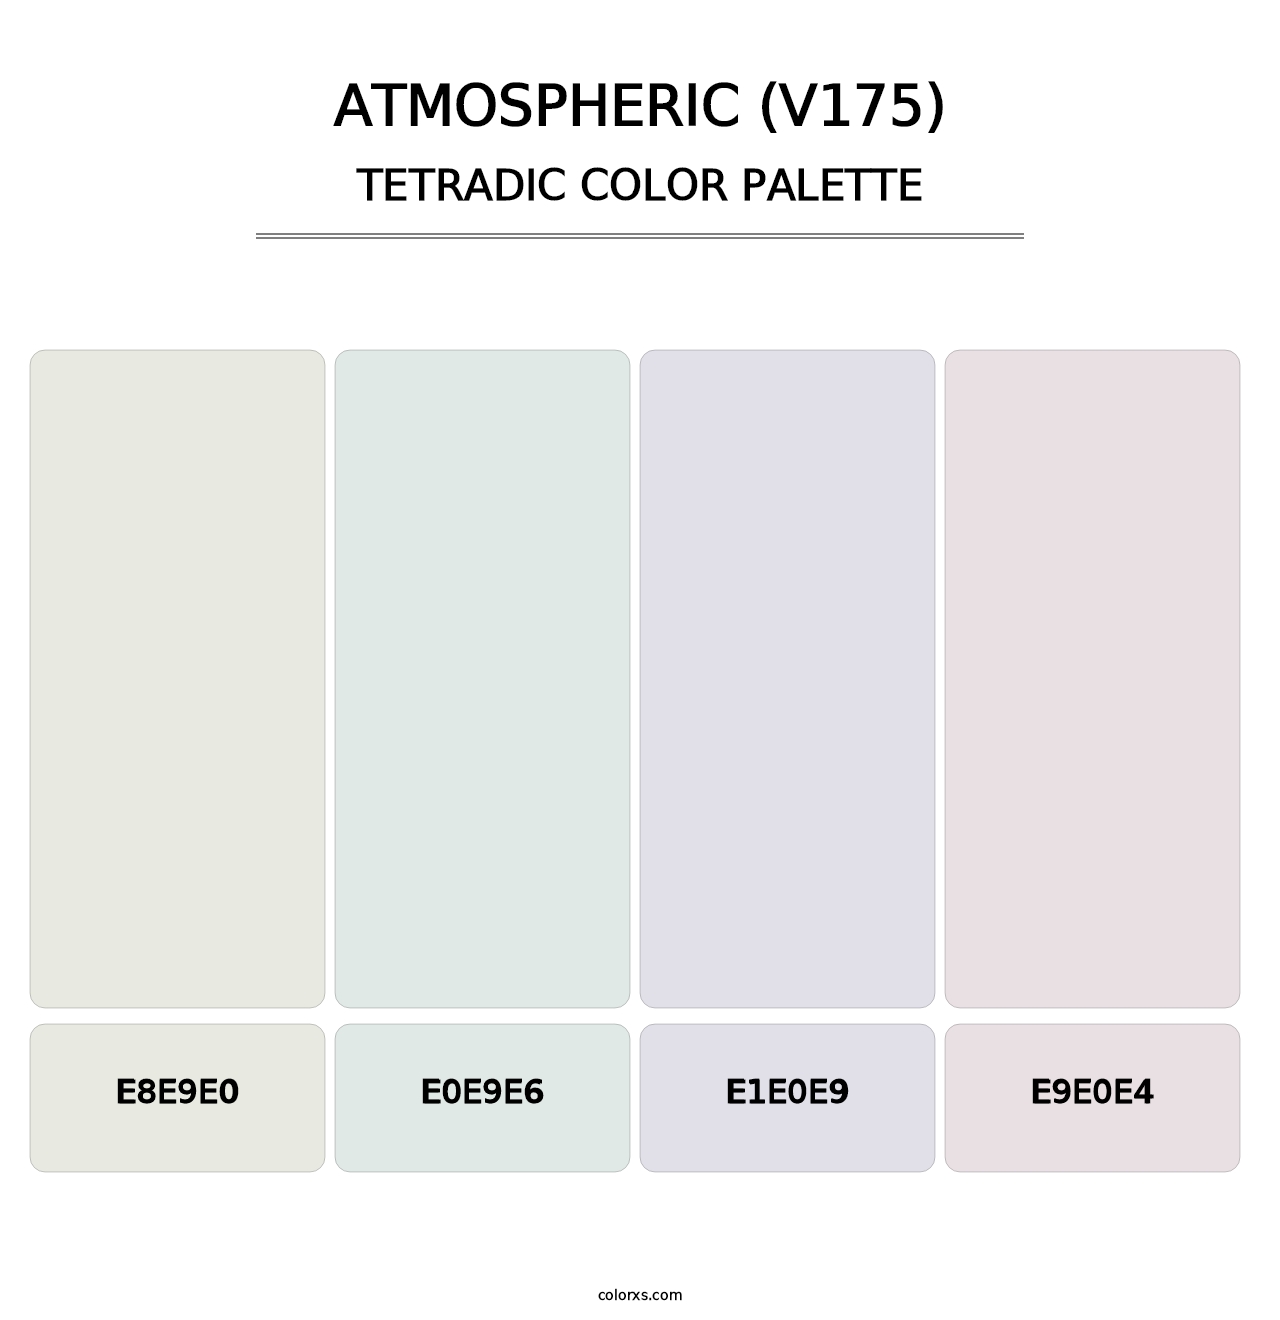 Atmospheric (V175) - Tetradic Color Palette